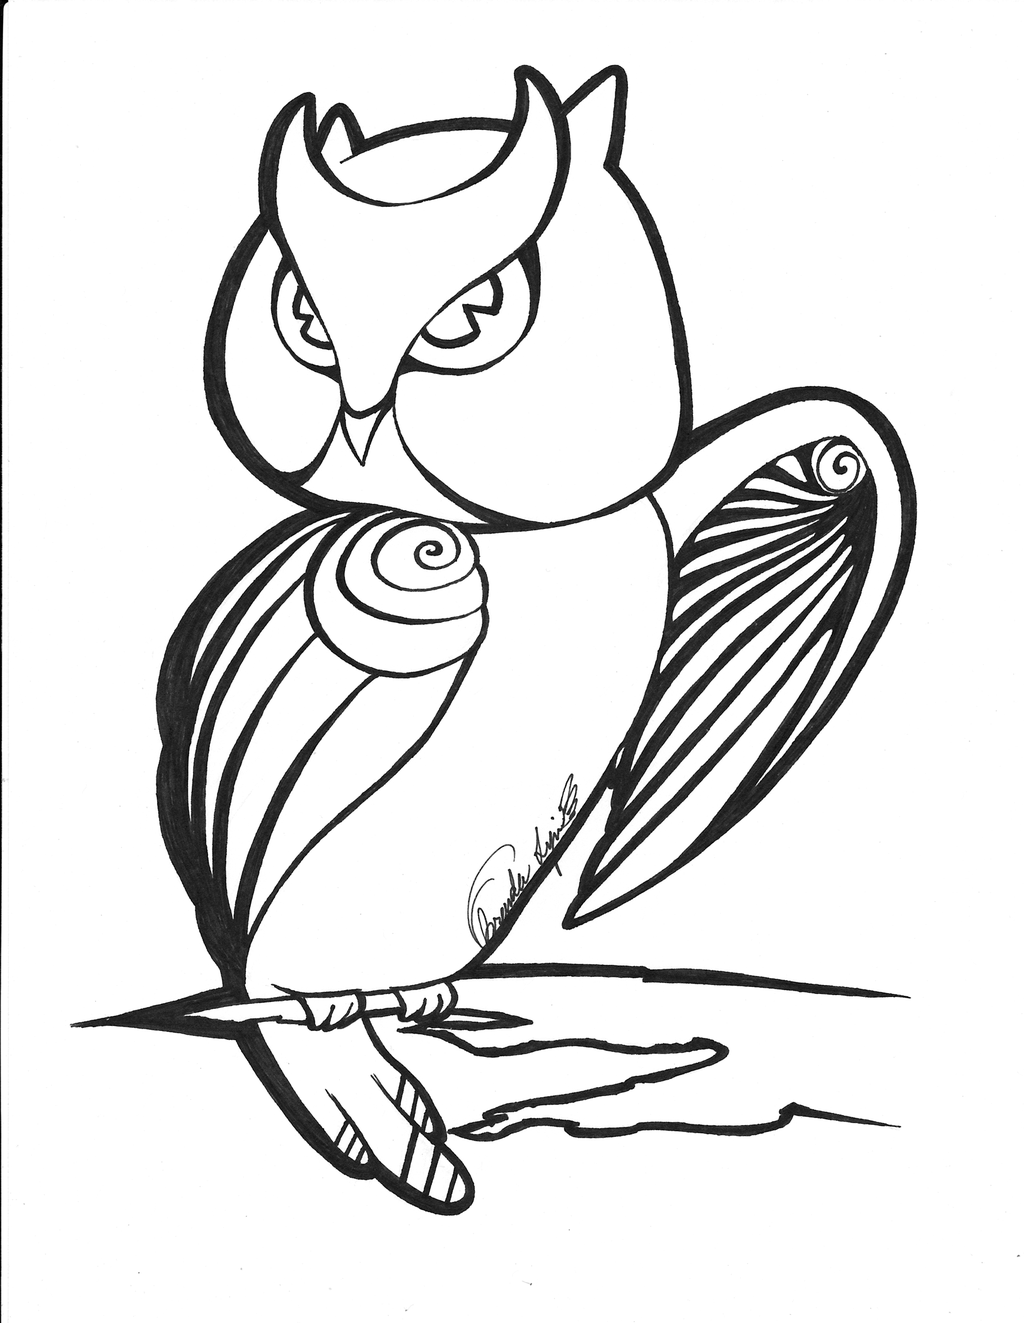 Best Photos of Cute Owl Outline - Easy Drawing Cute Cartoon Owls ...